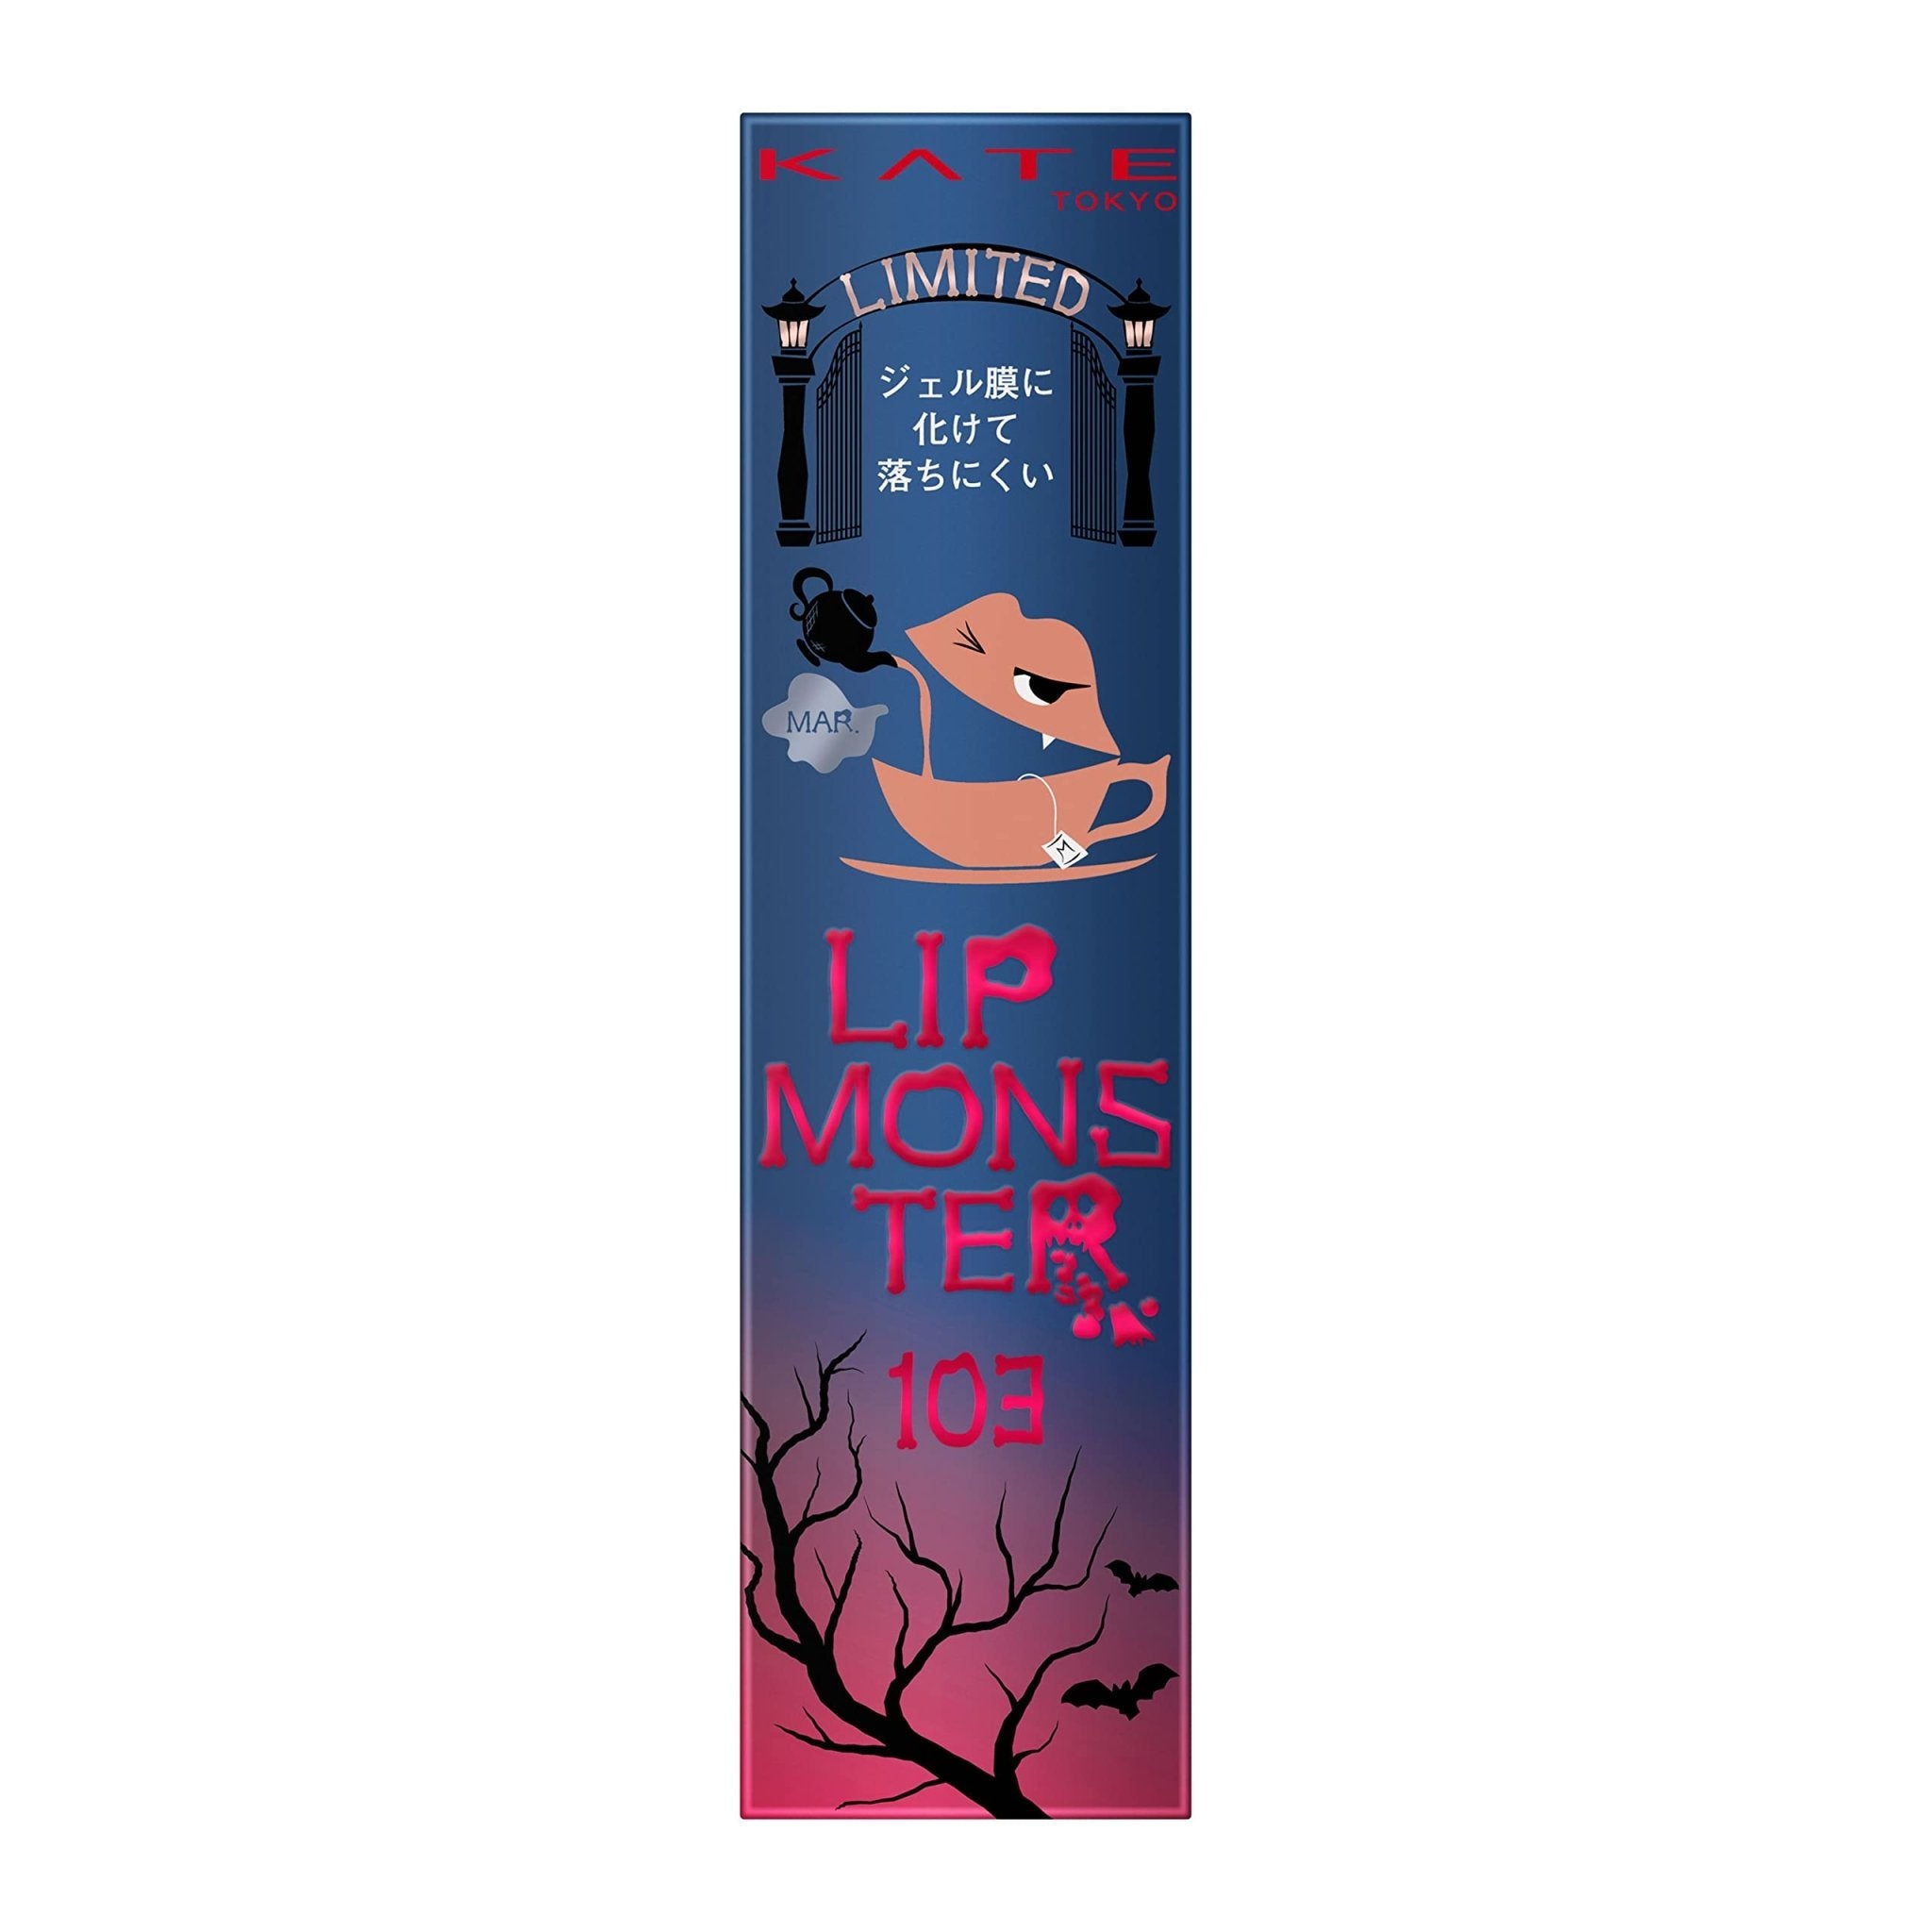 Kate Lip Monster 103 1 - Piece Pack Vivid Lip Color by Kate